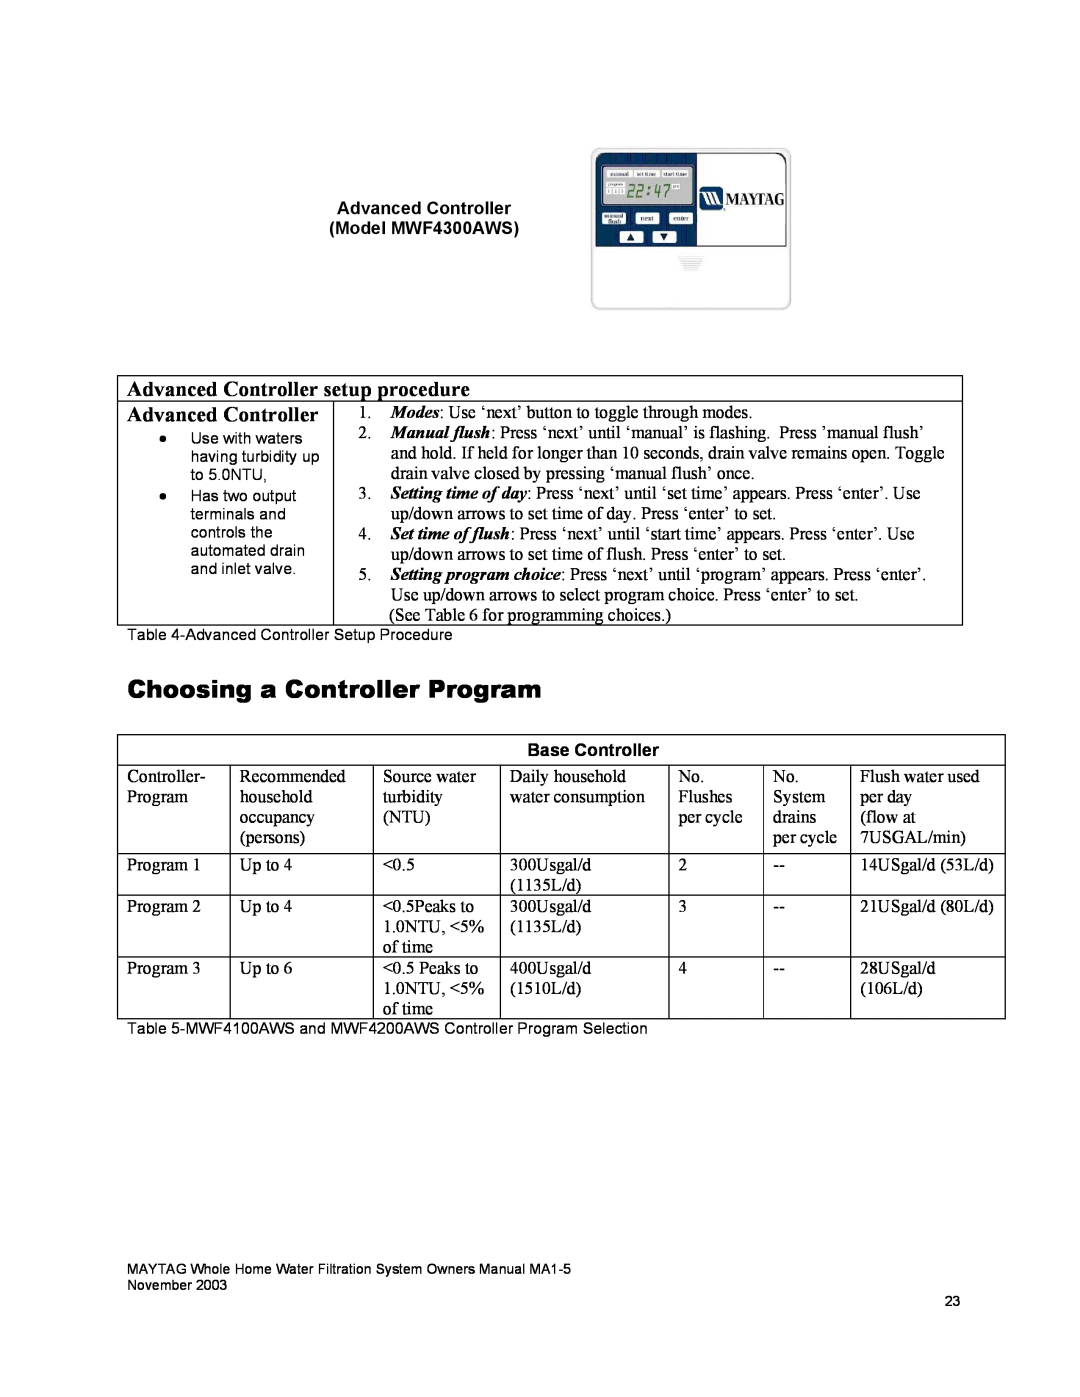 Maytag mwf4100aws owner manual Choosing a Controller Program, Advanced Controller setup procedure 